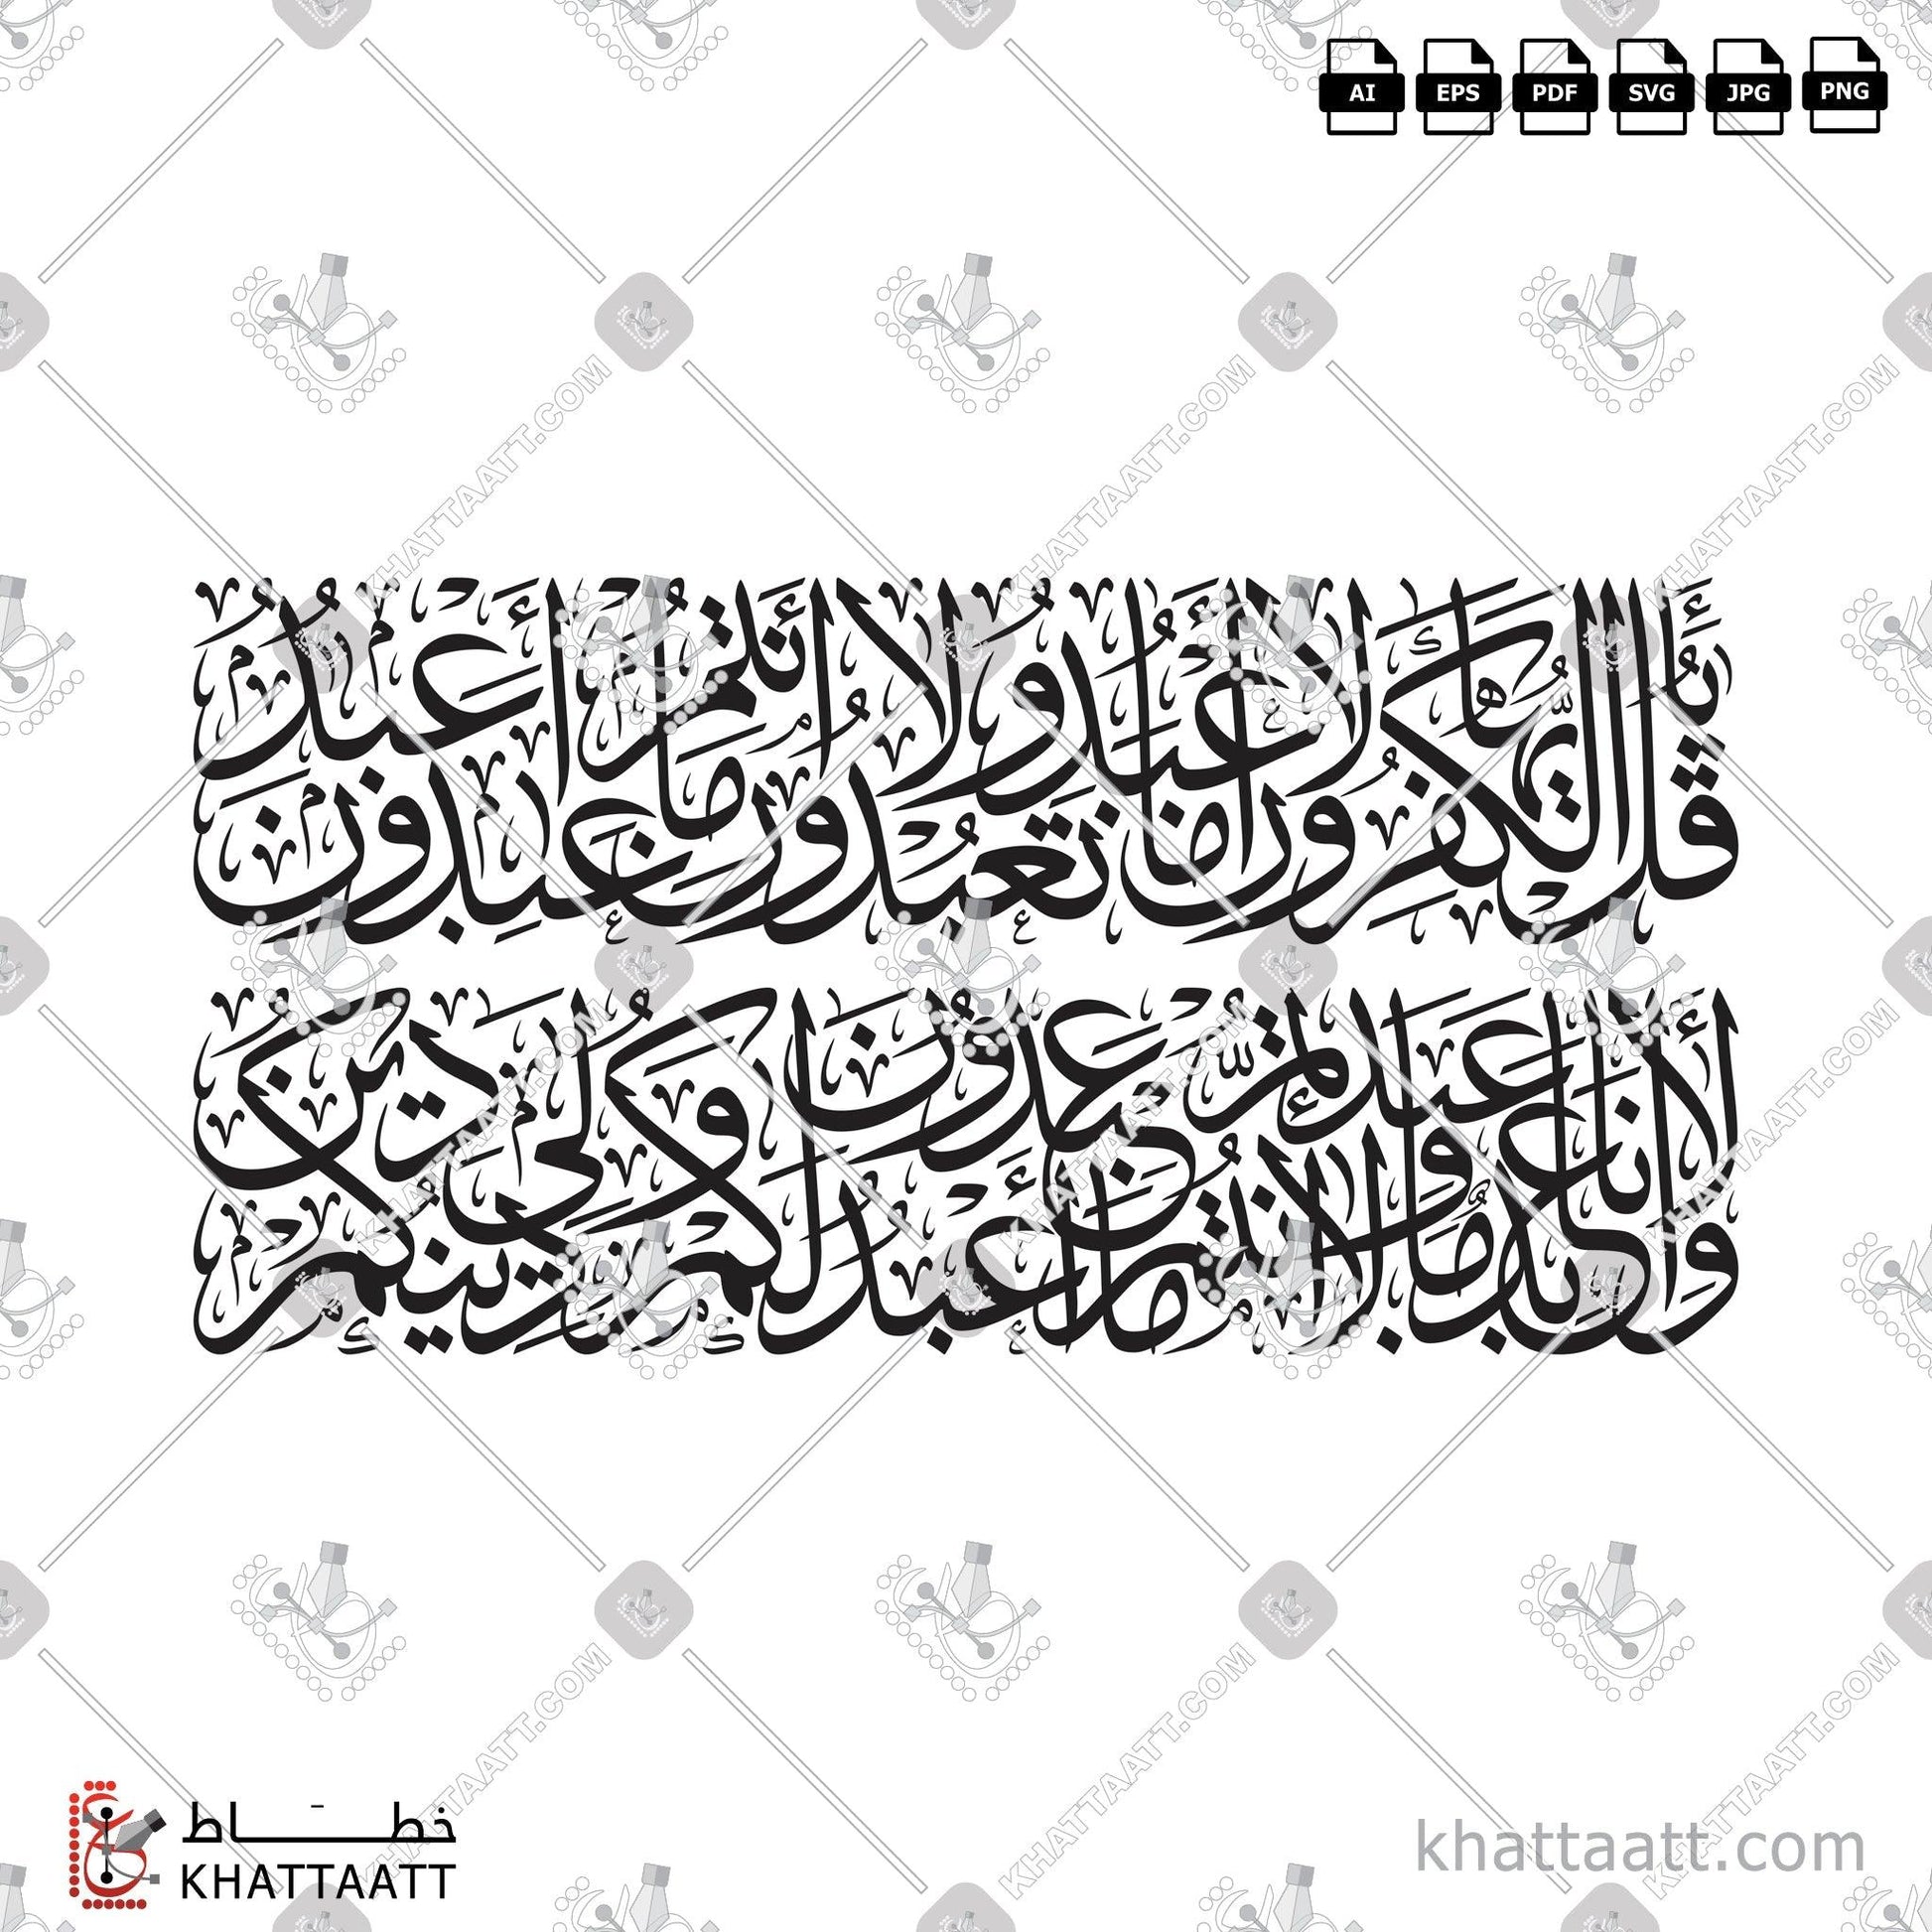 Download Arabic Calligraphy of Surat Al-Kafirun - سورة الكافرون in Thuluth - خط الثلث in vector and .png